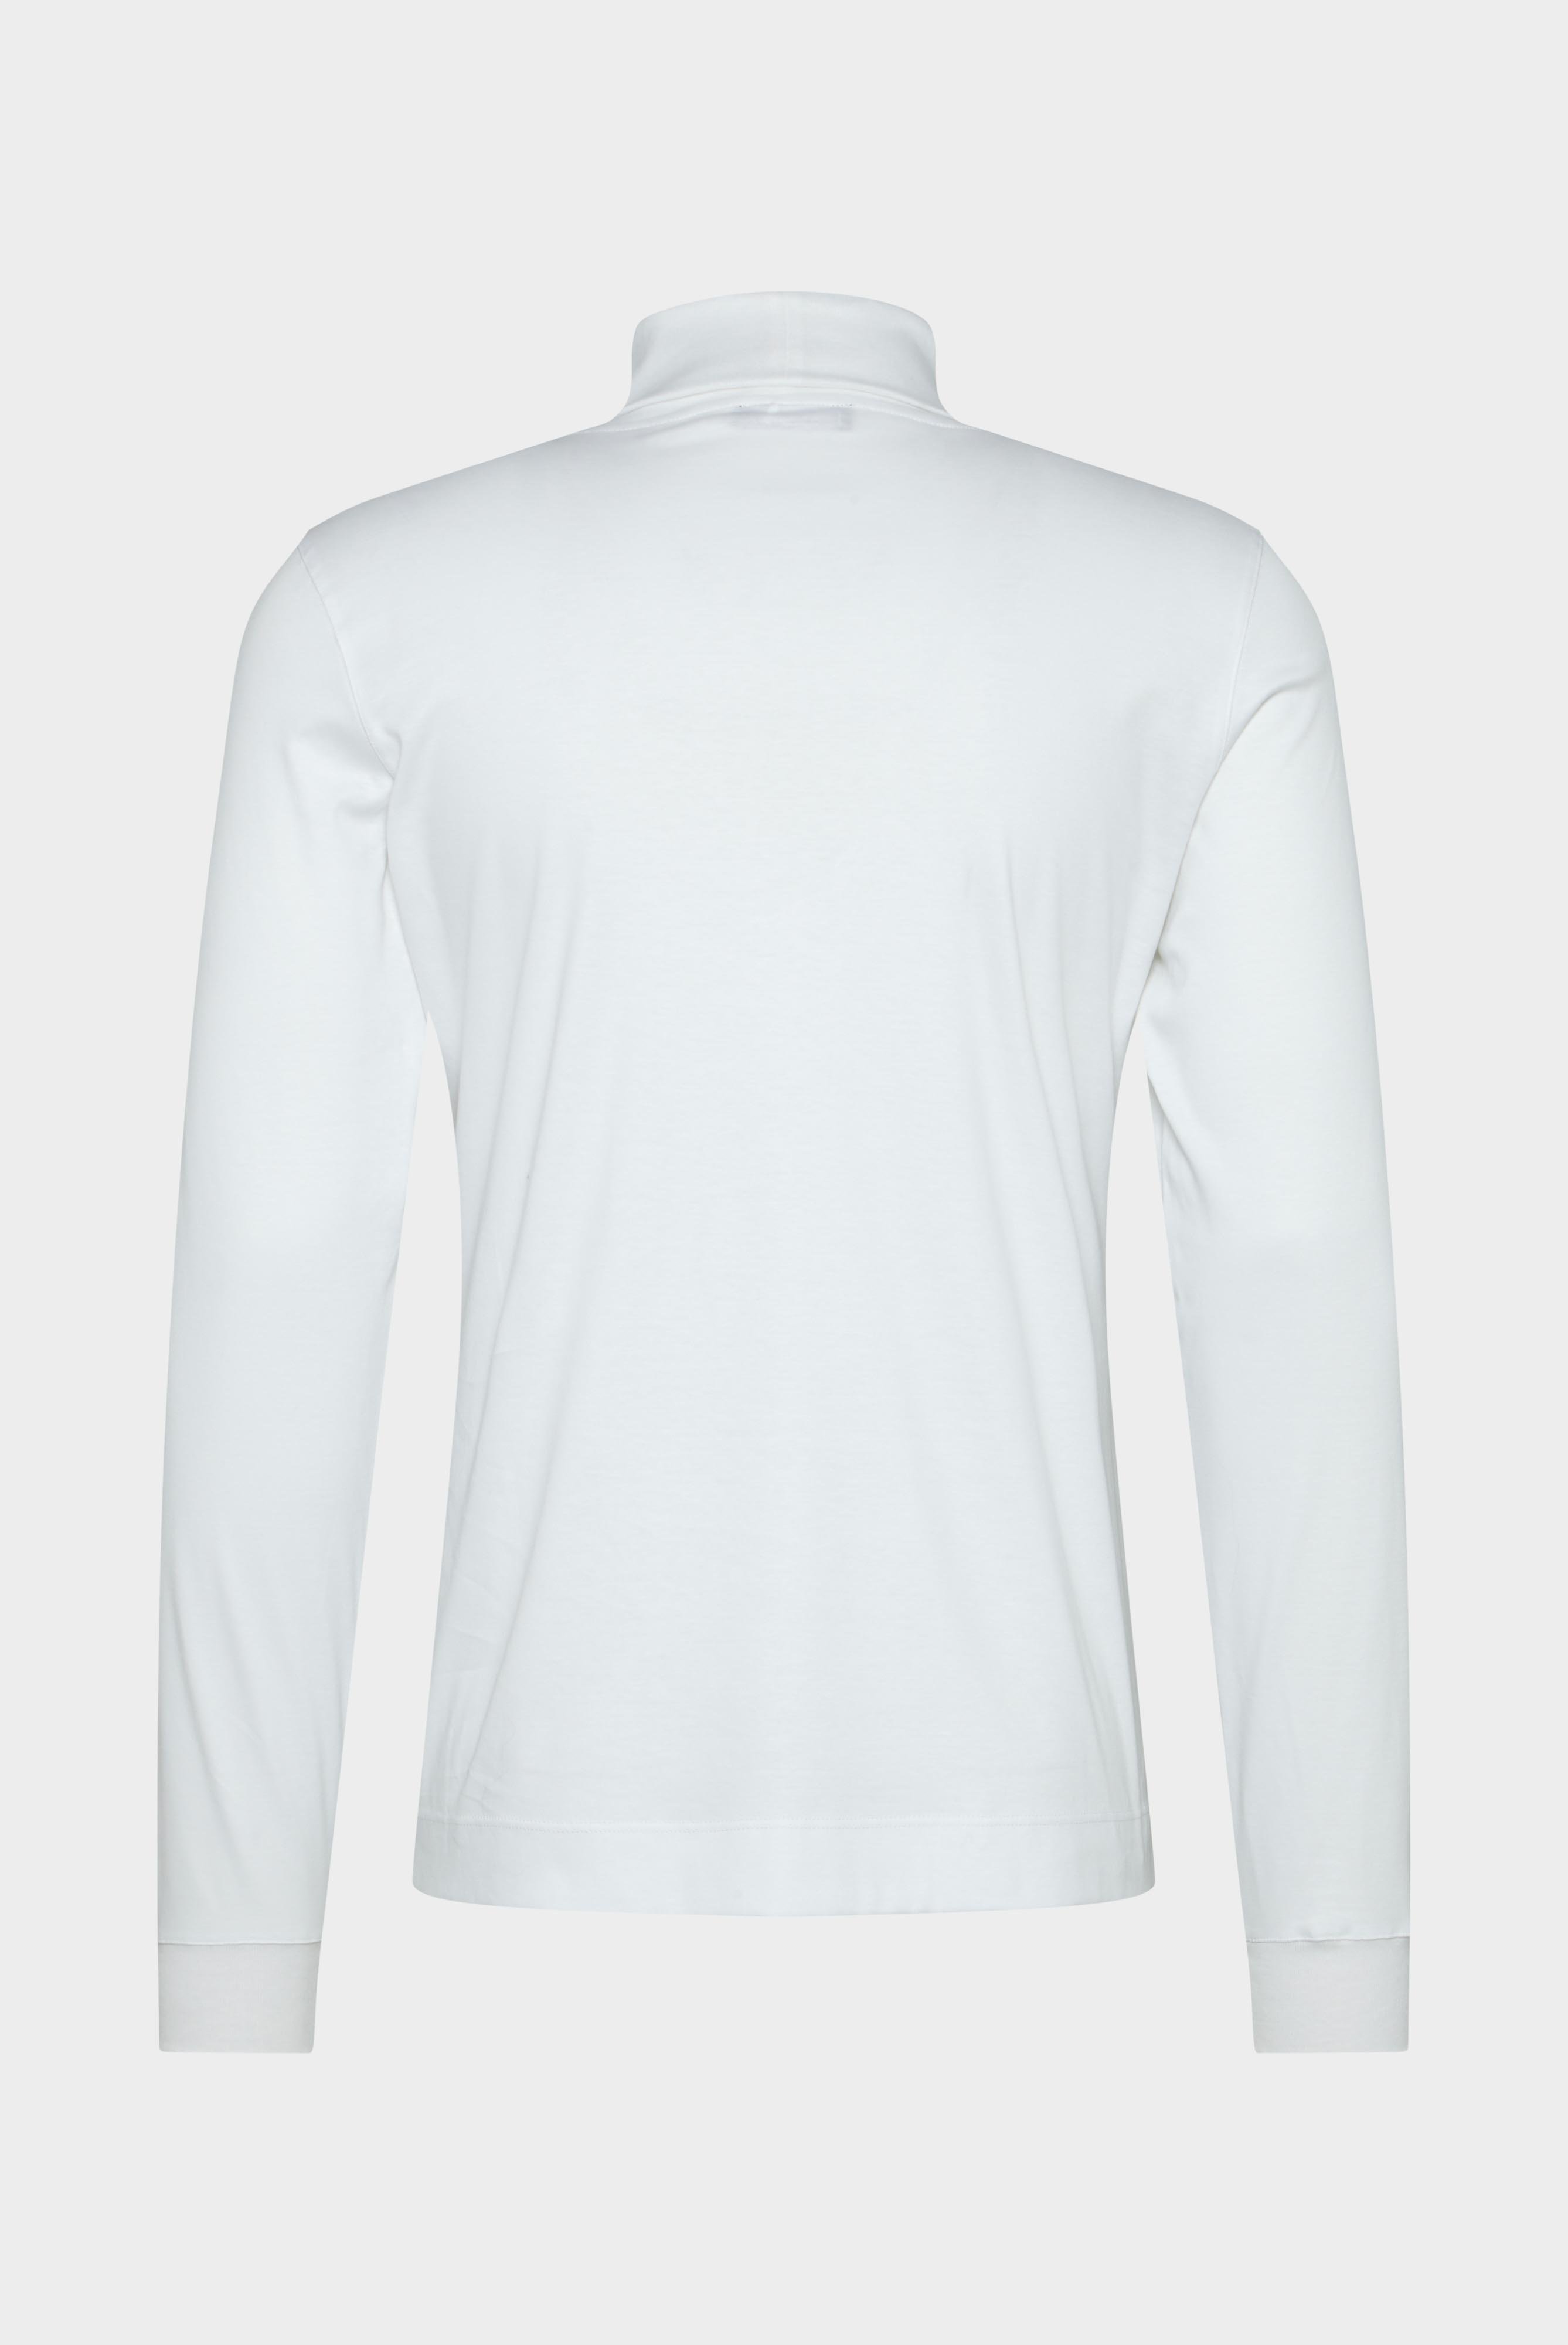 T-Shirts+Swiss Cotton Jersey Turtleneck Shirt+20.1719.UX.180031.000.S